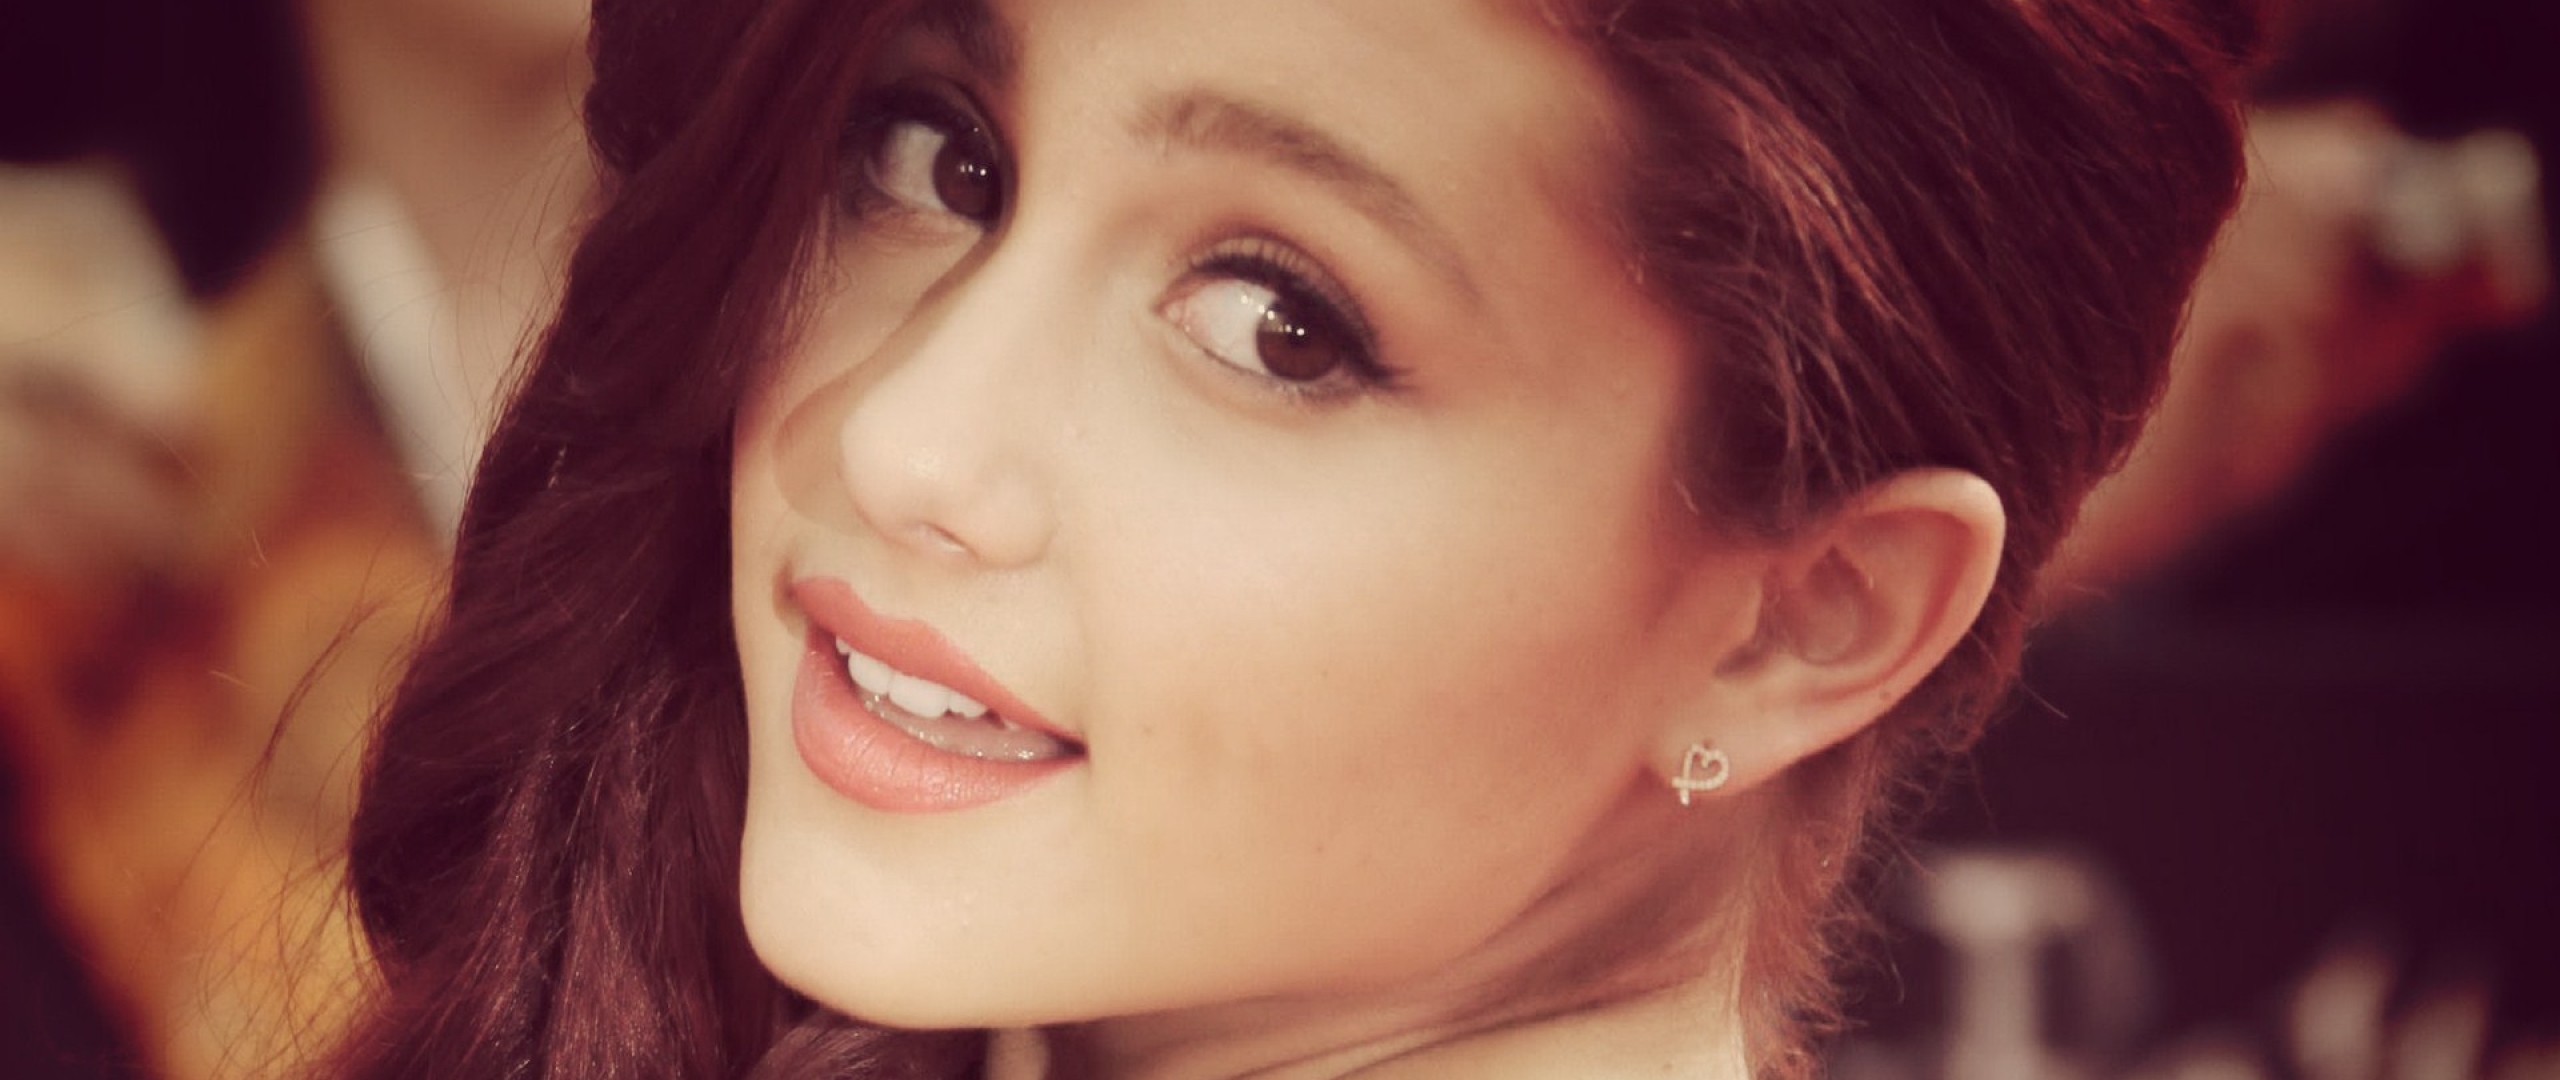 Ariana Grande Close Up Photoshoot, Full HD Wallpaper